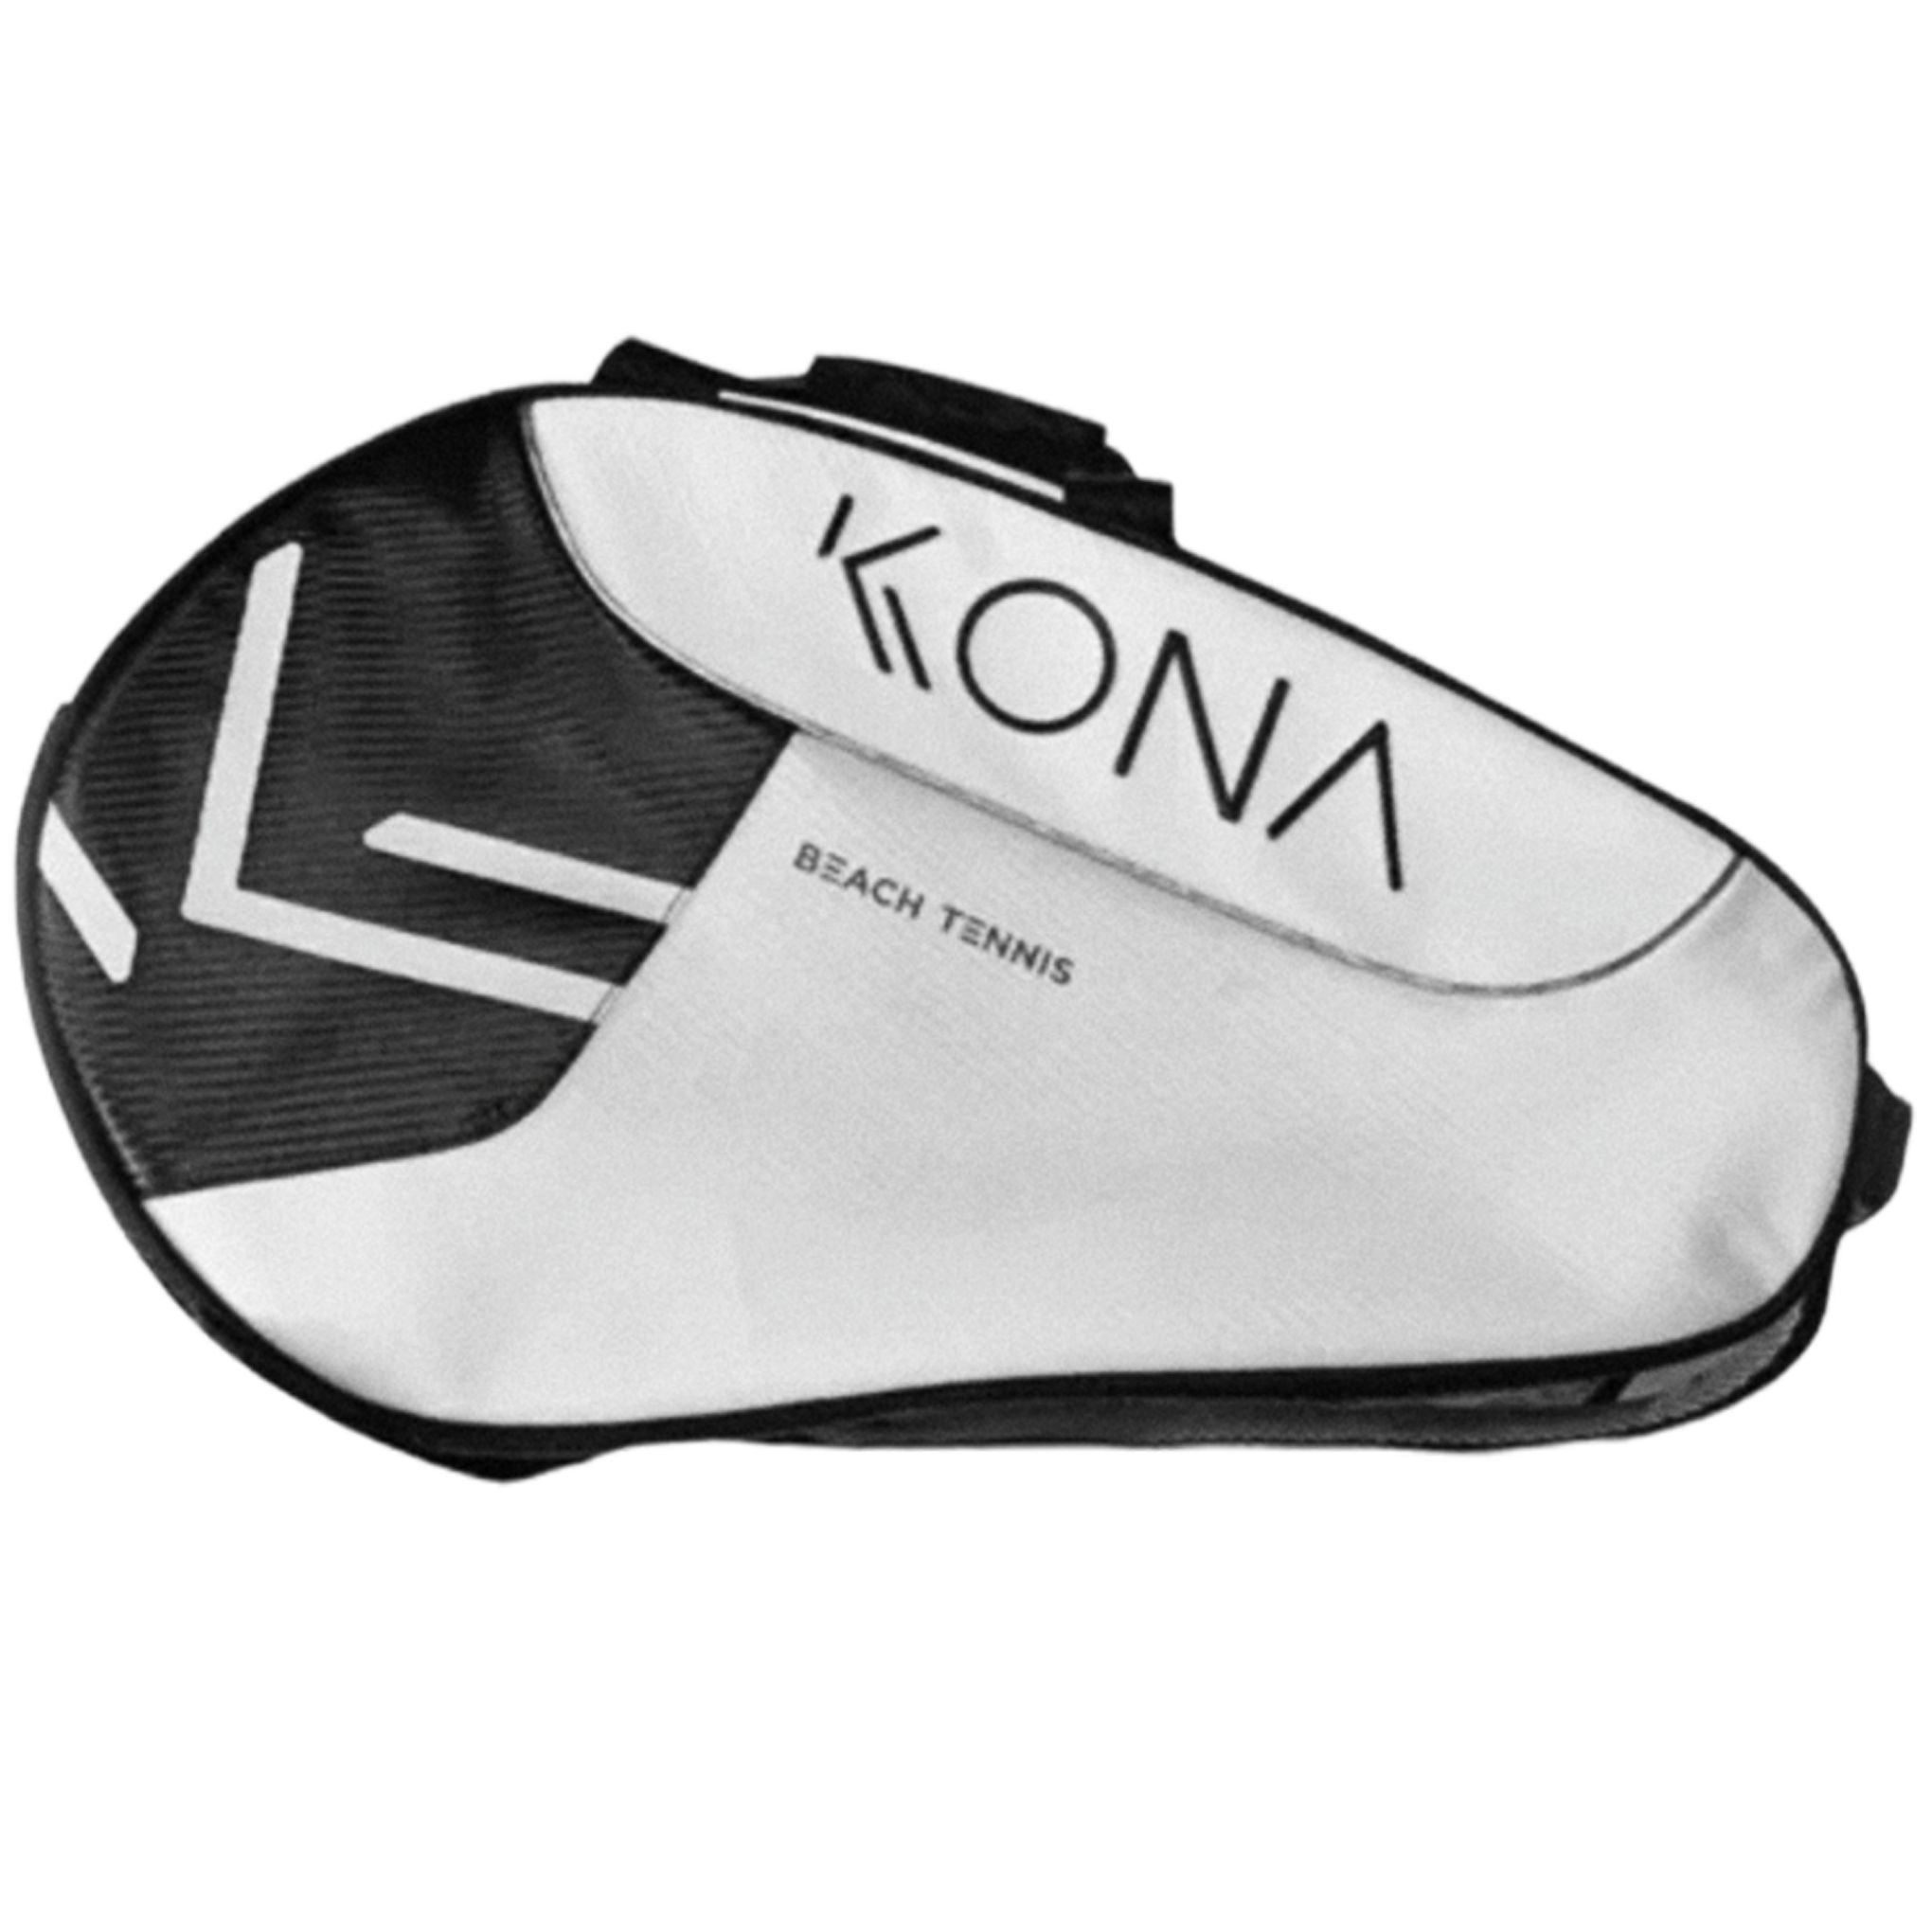 Kona Beach Tennis Racket White Bag - Thermal 2022